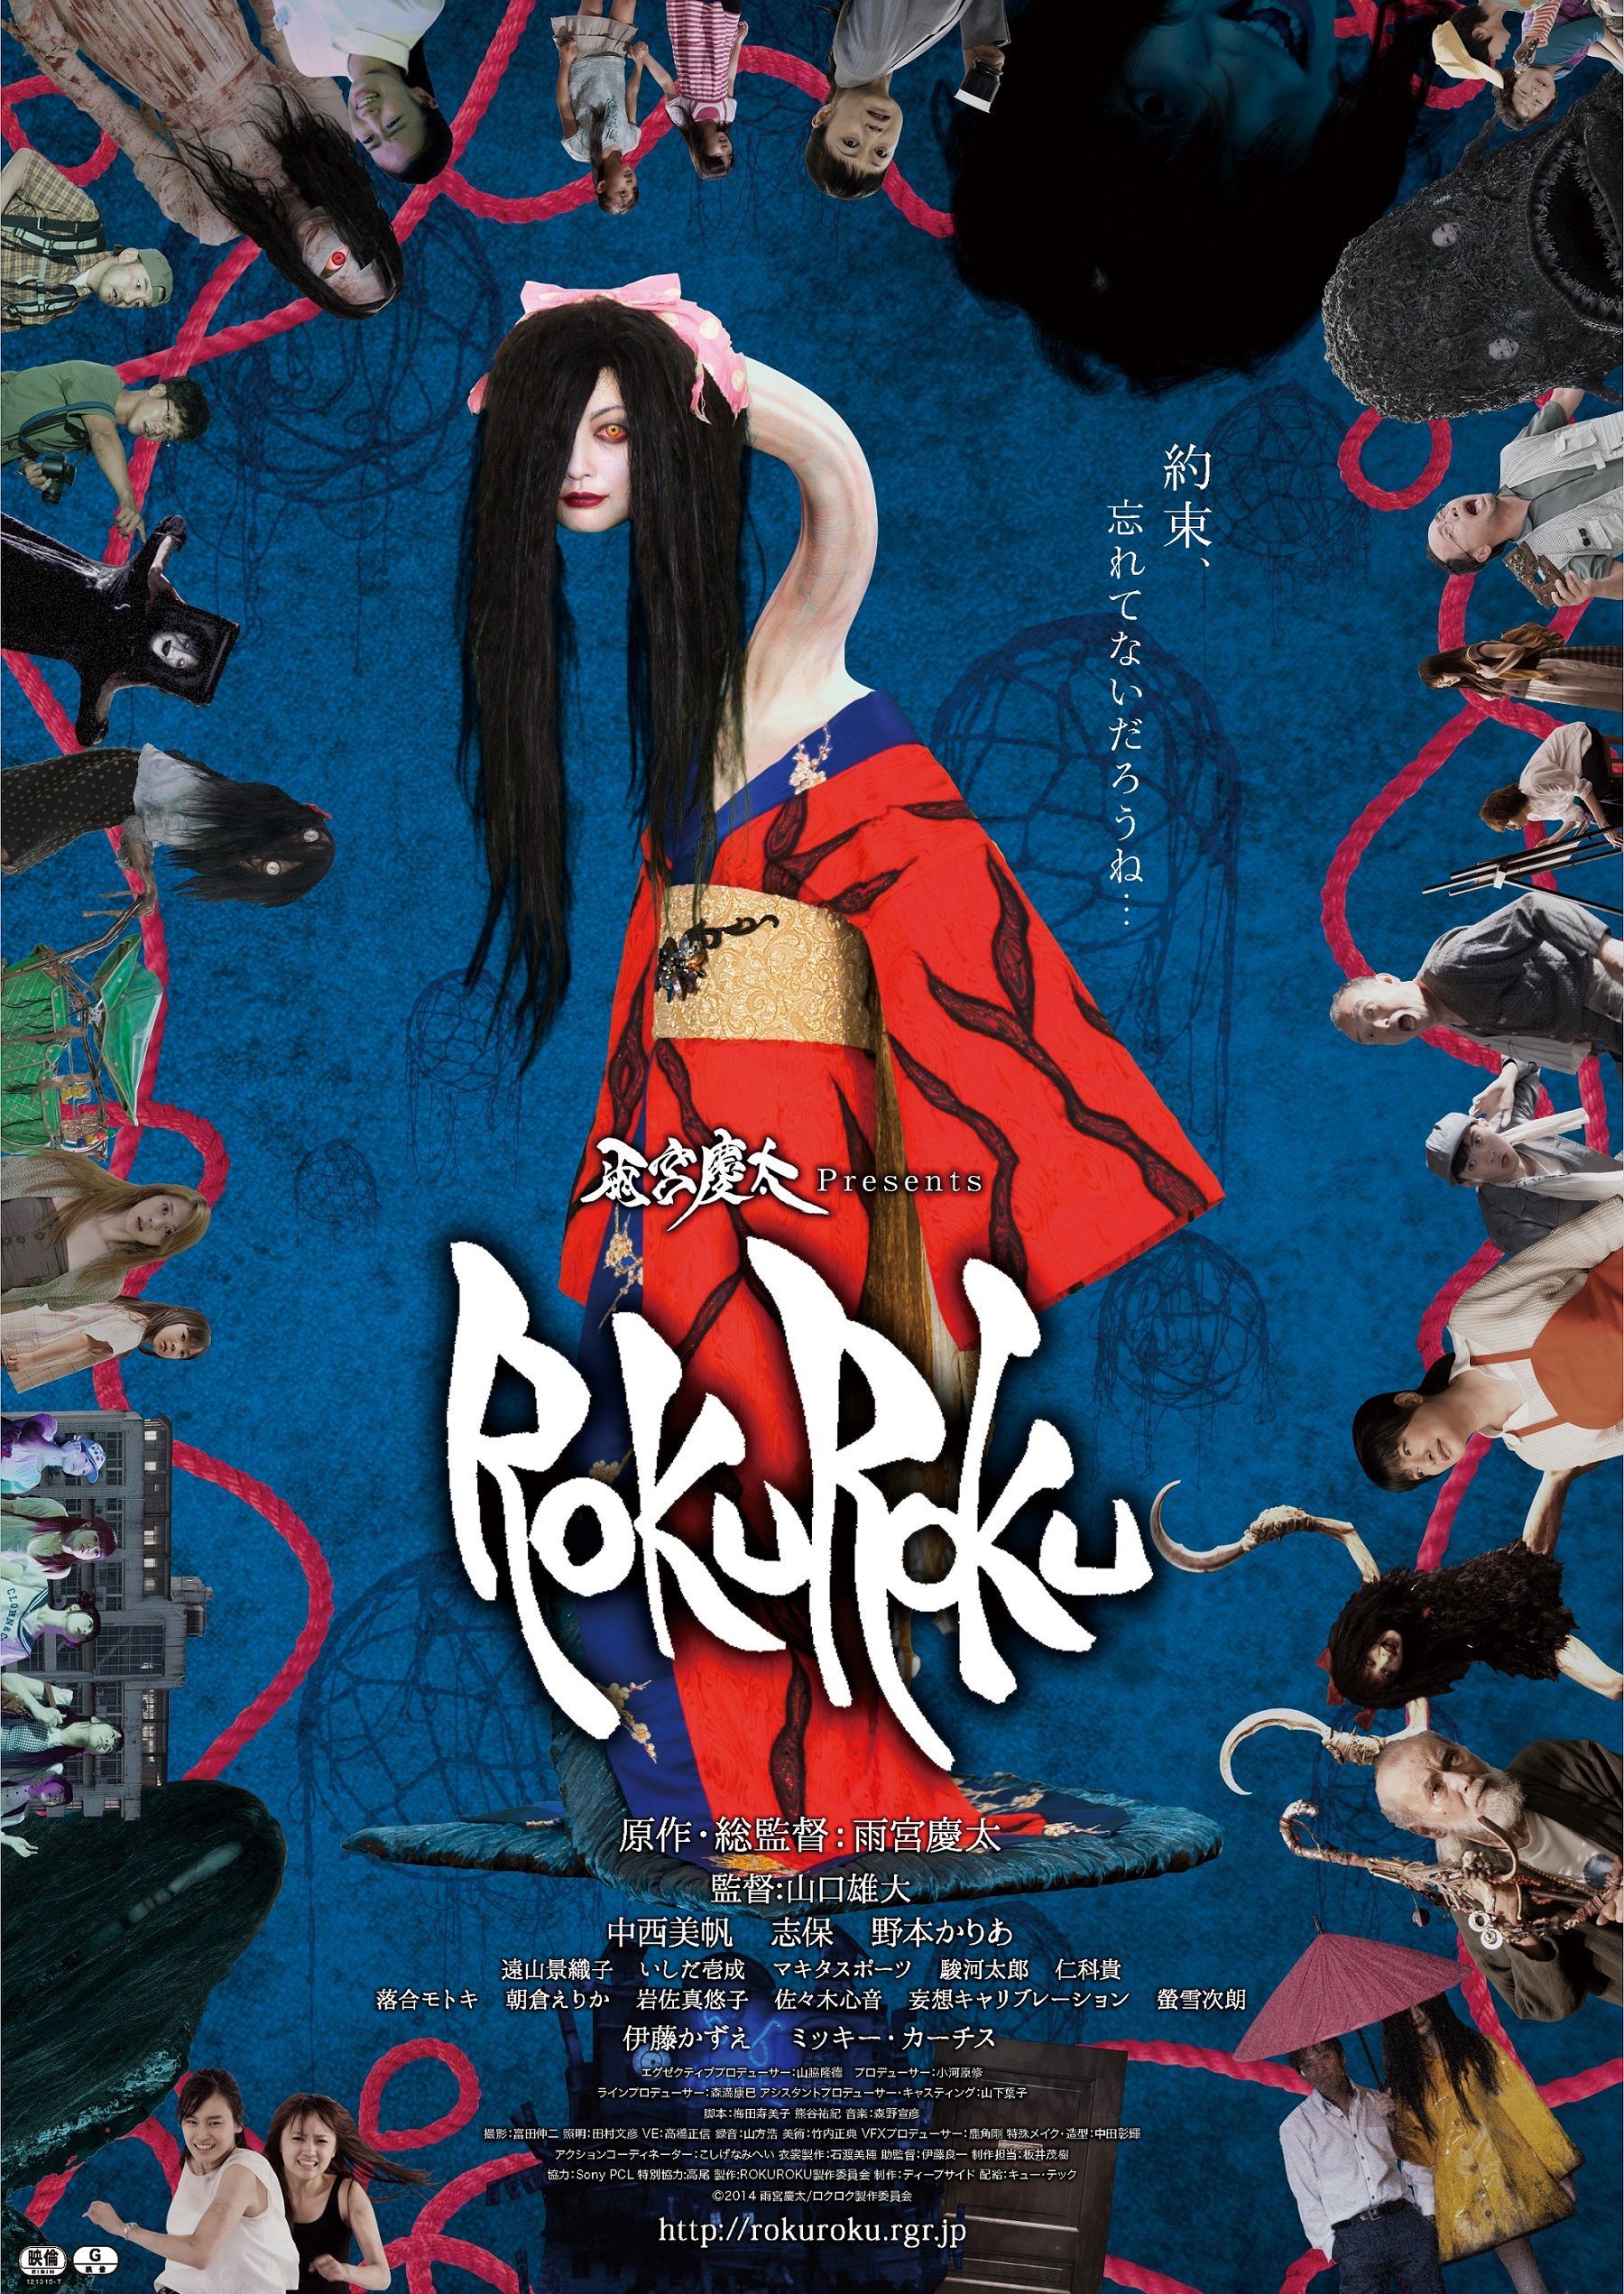 Fantasia 18 Review Rokuroku Is A Confounding Low Budget Mess Of An Ominous Omnibus